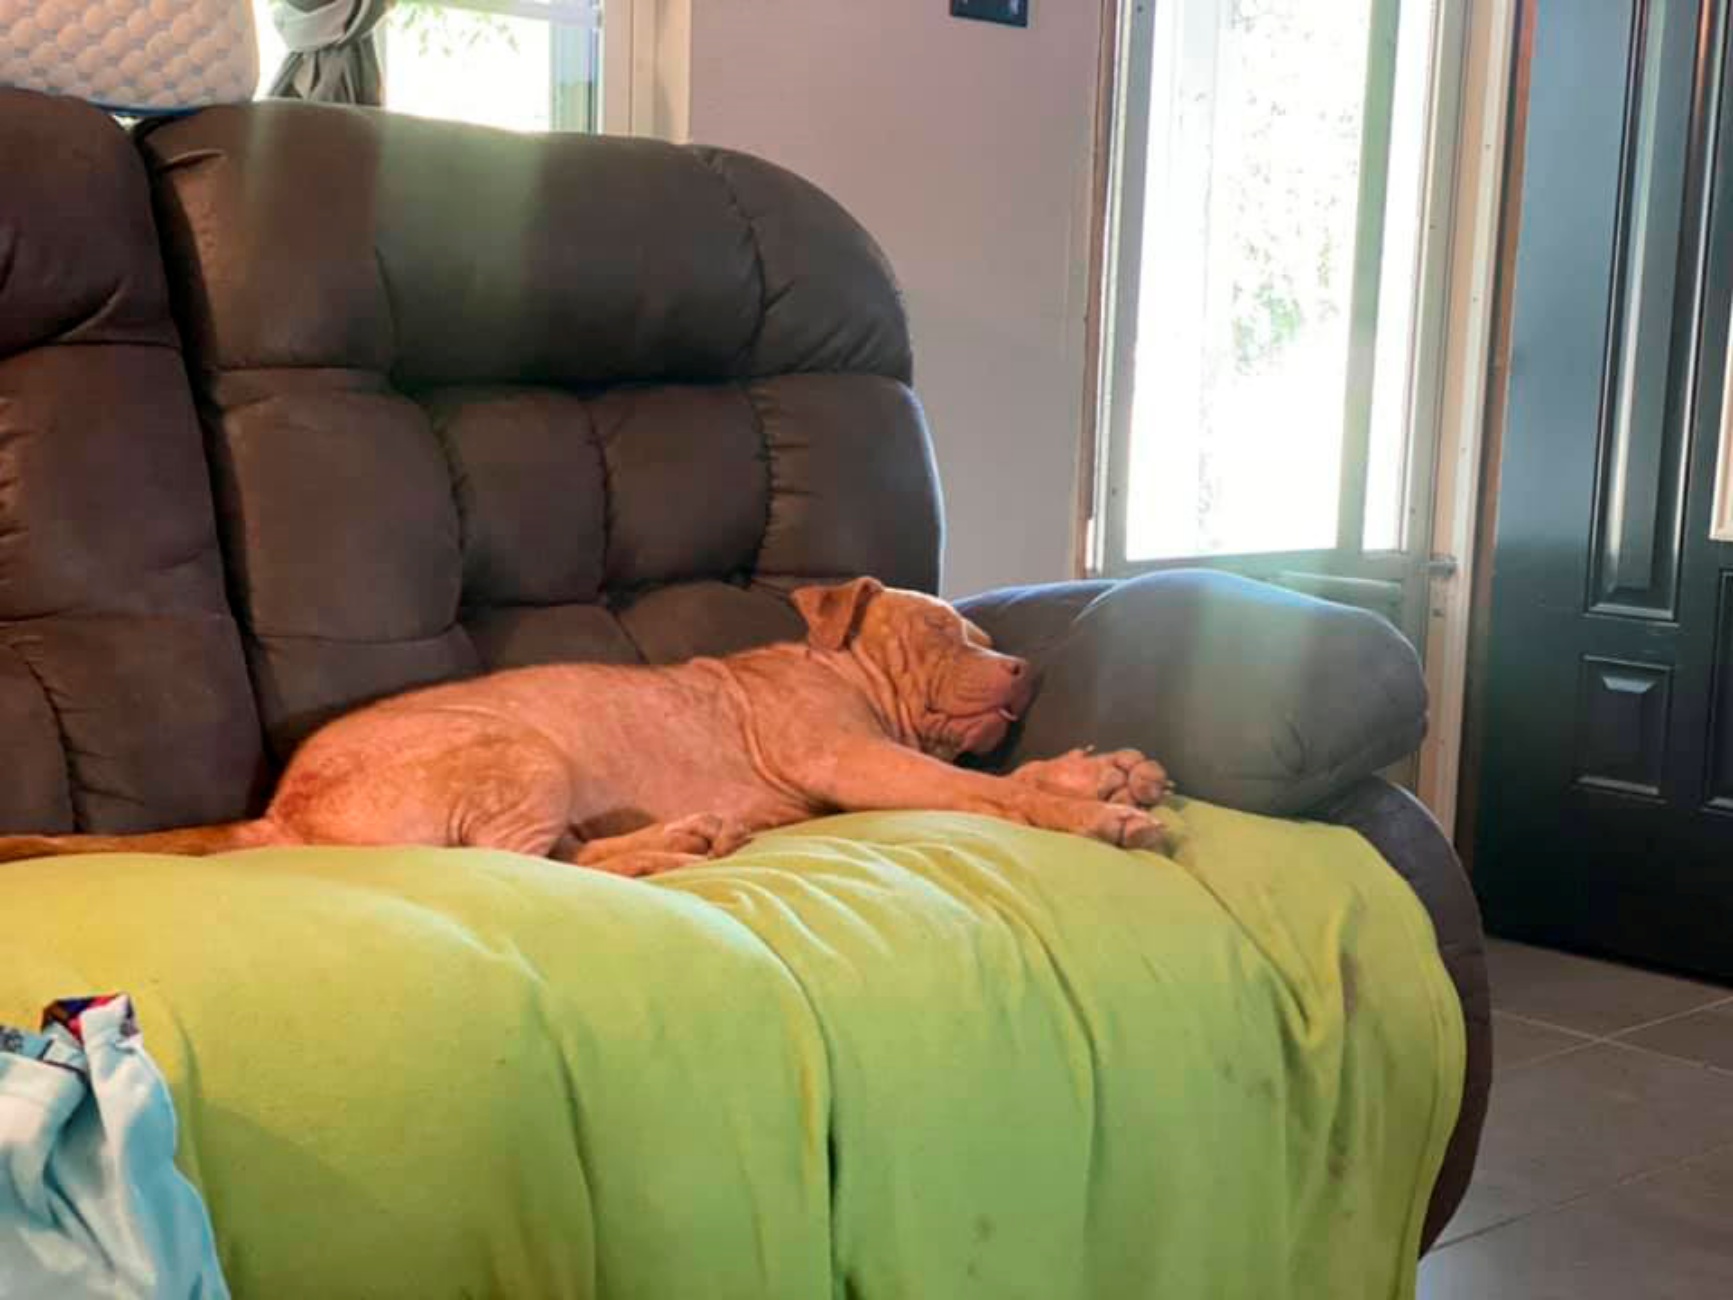 cane dorme sul divano